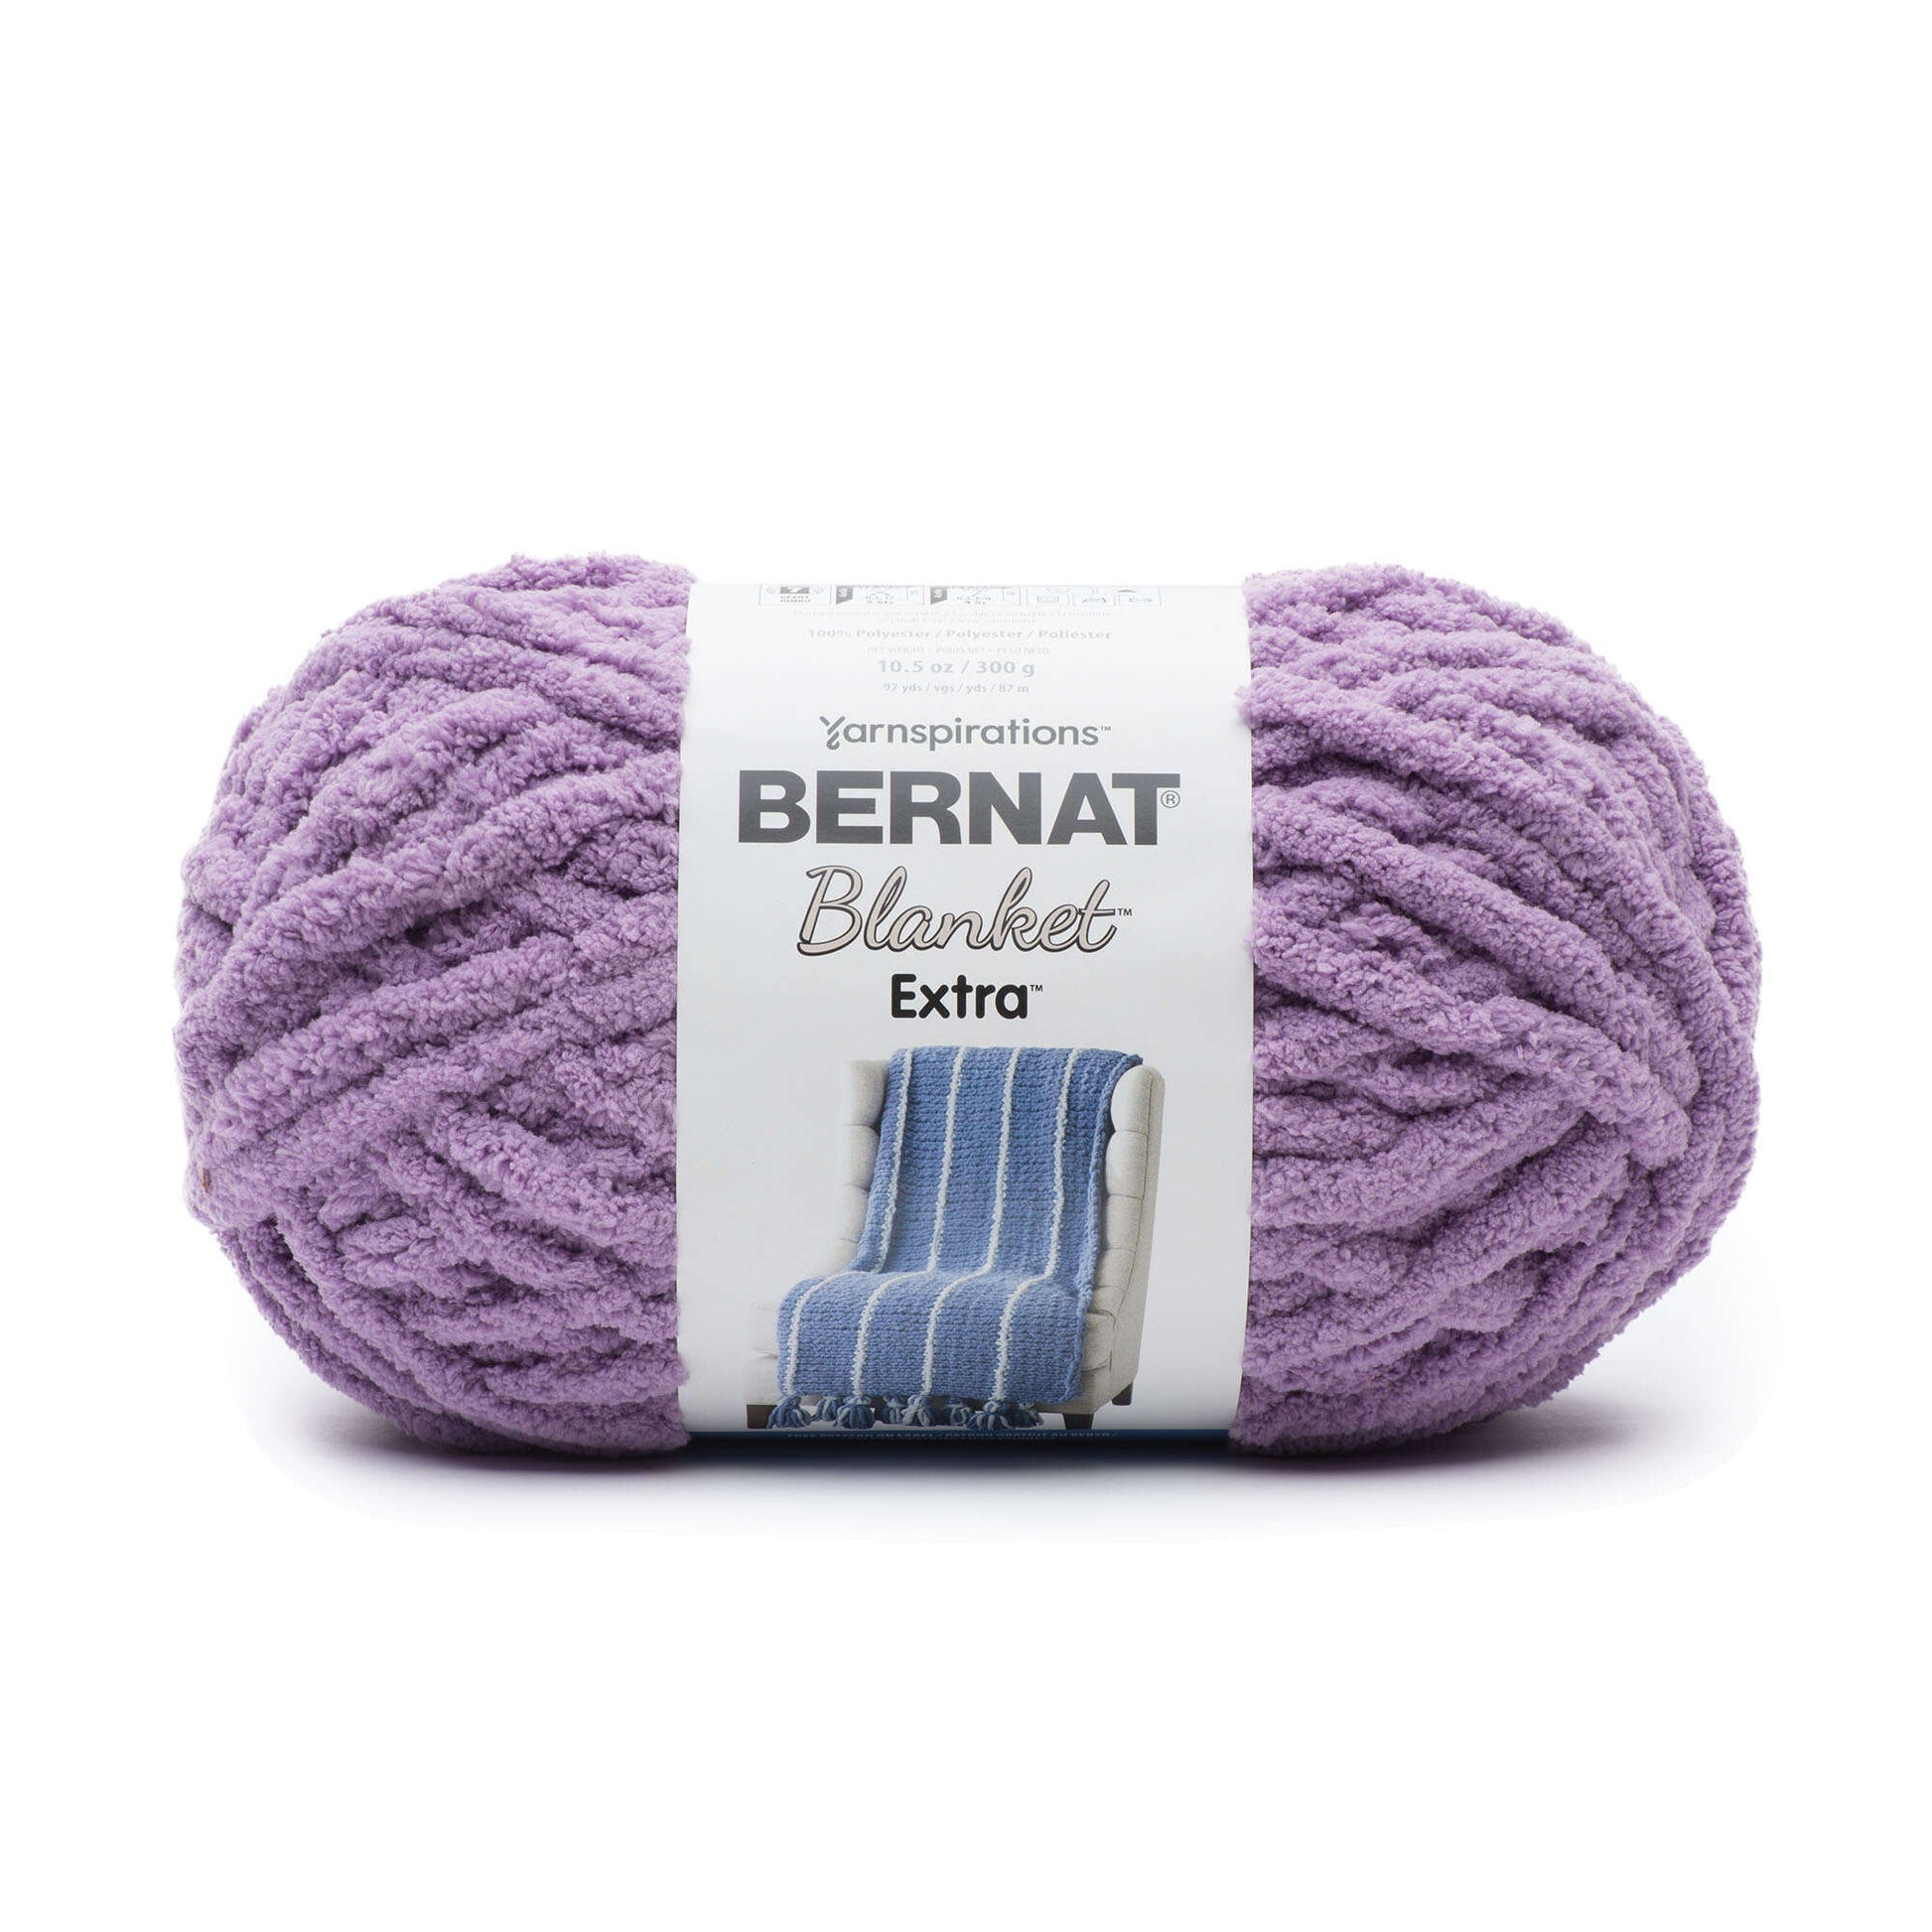 Bernat Blanket Extra - Yarn, burgundy plum. Colour: purple